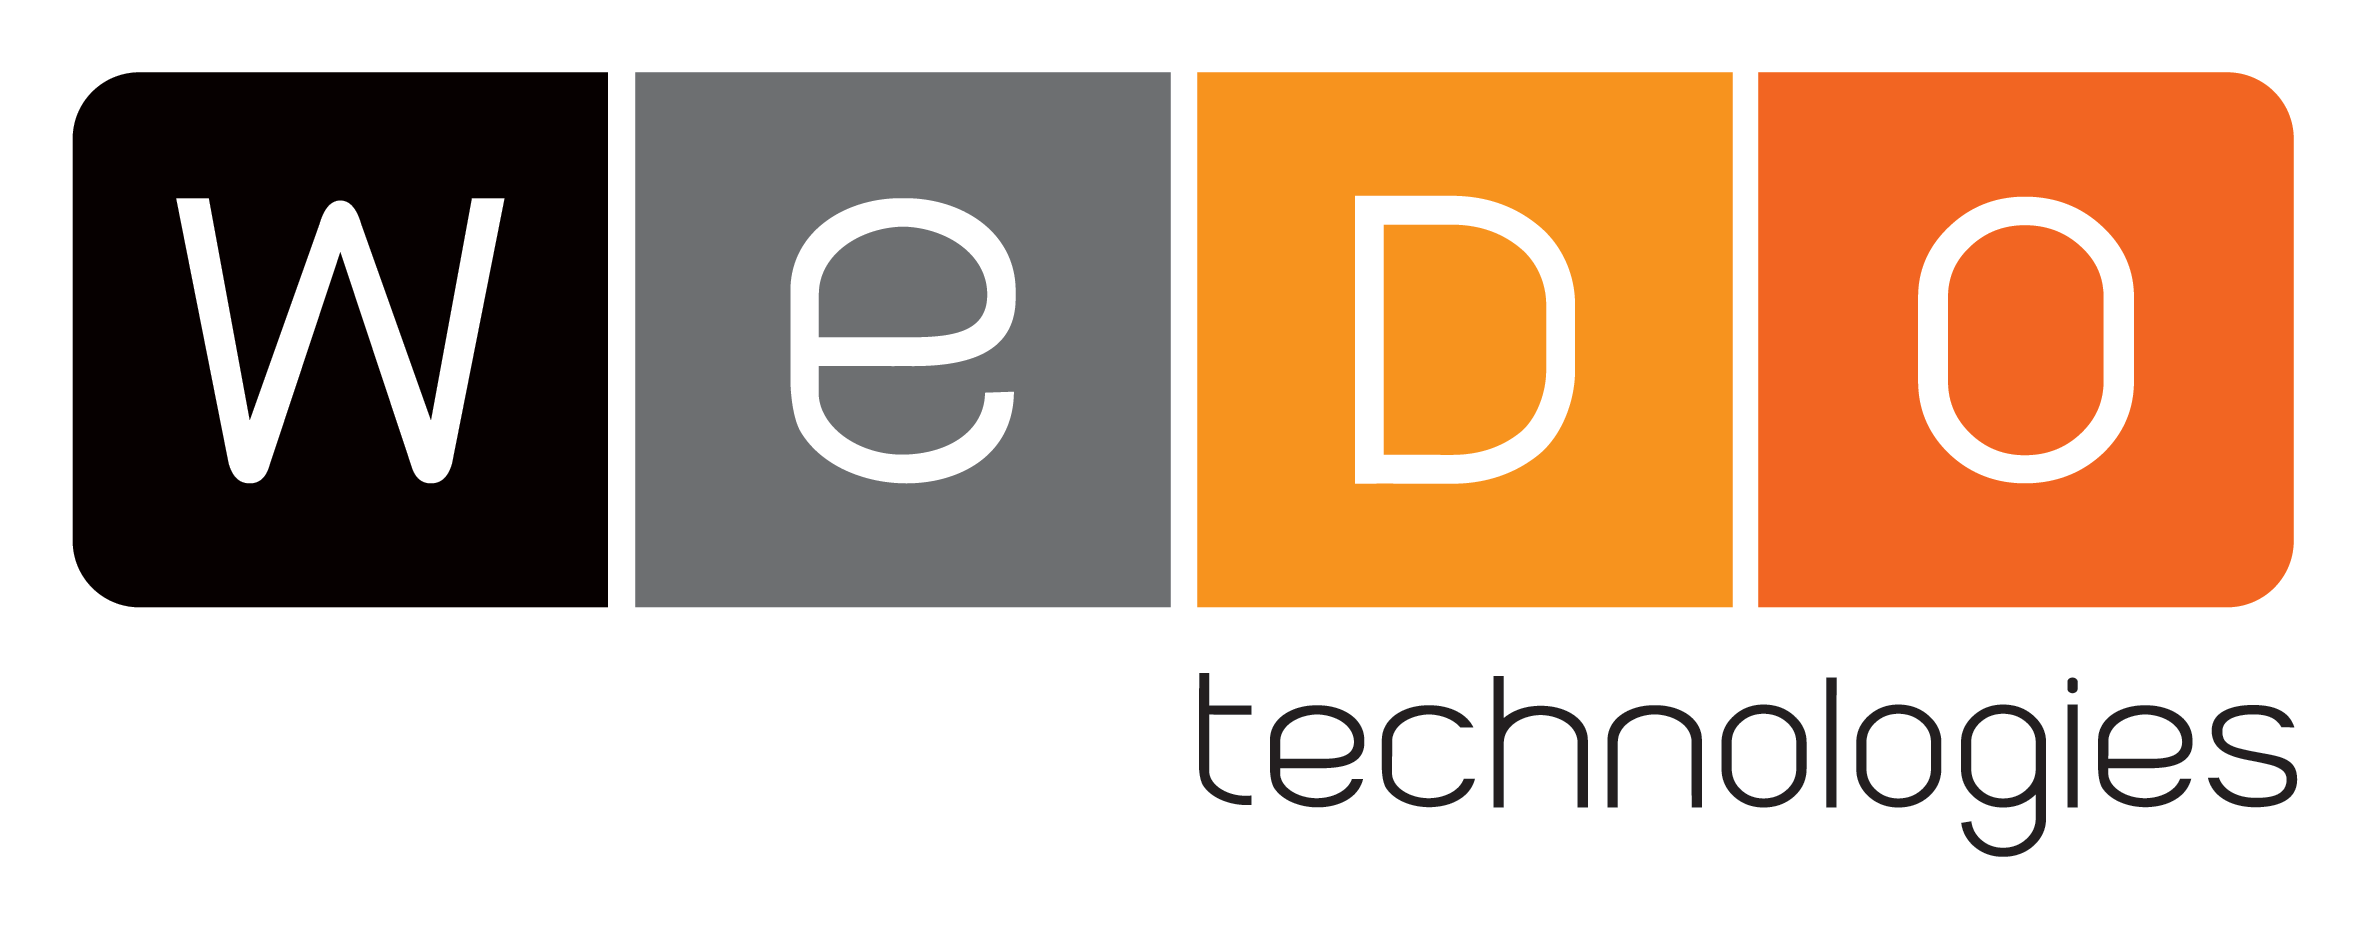 Portuguese Corporation Tech Logo - WeDo Technologies